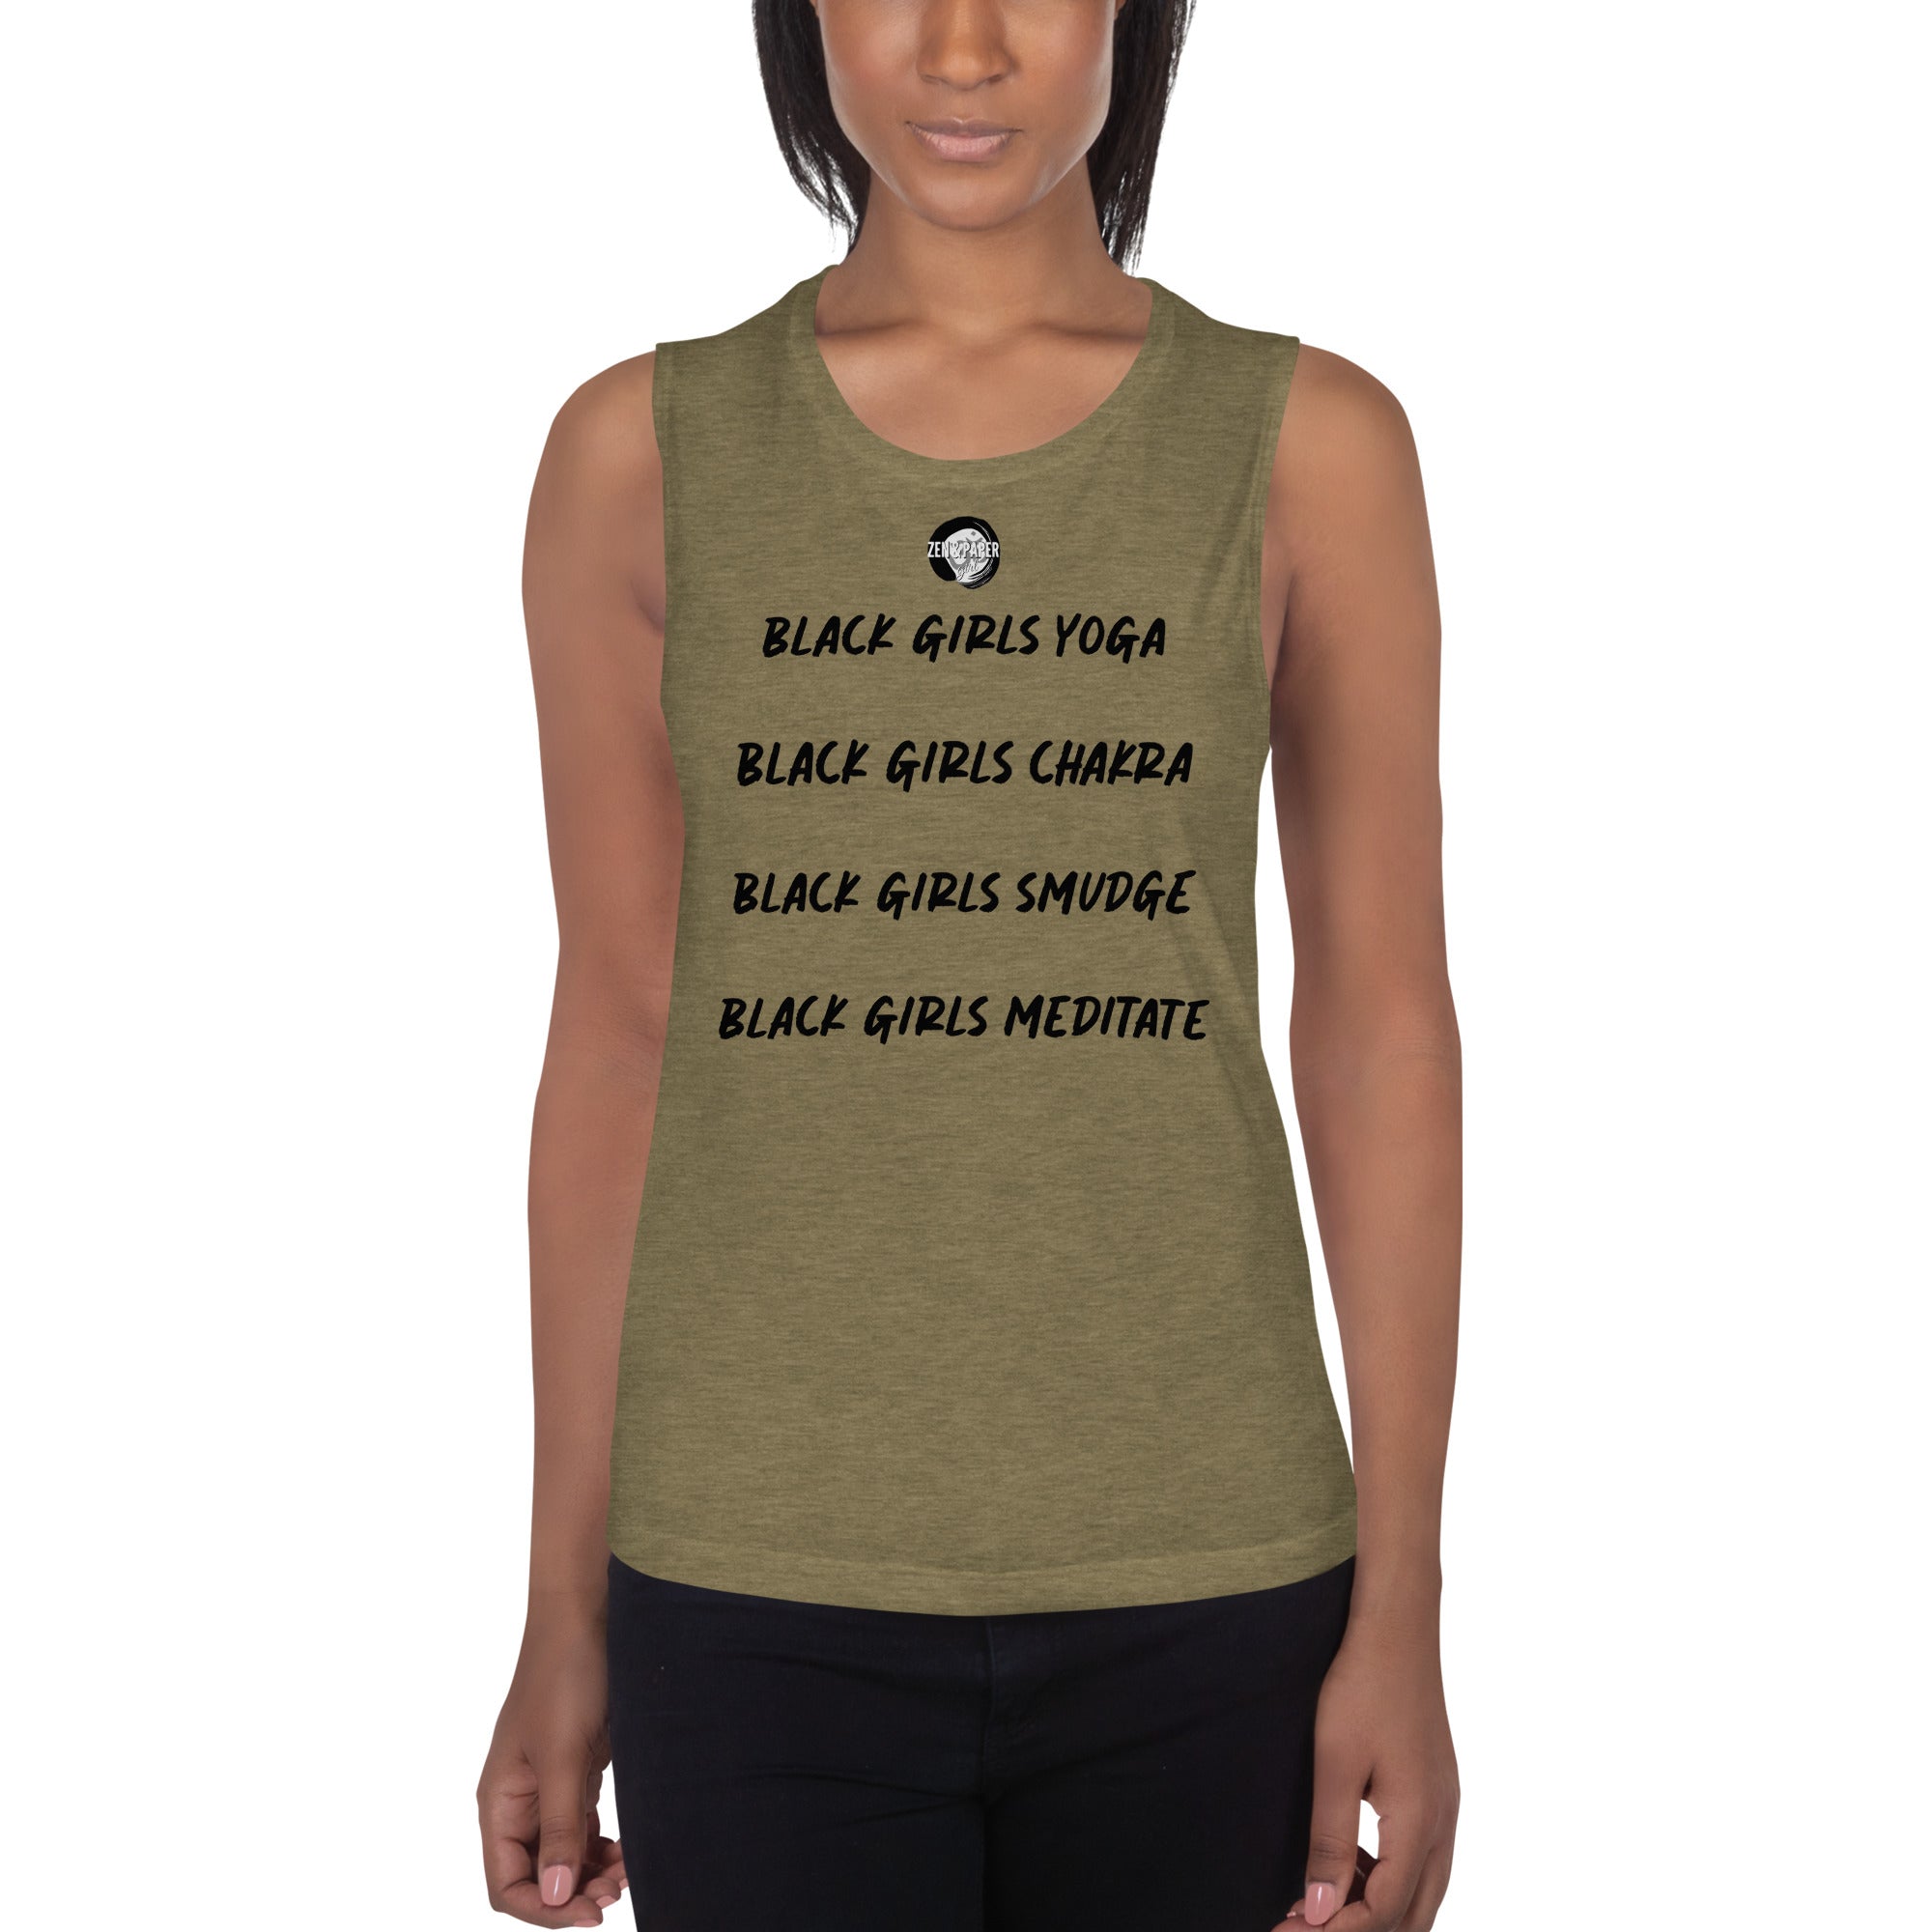 Zen & Paper Girl Black Girls Yoga Ladies’ Muscle Tank